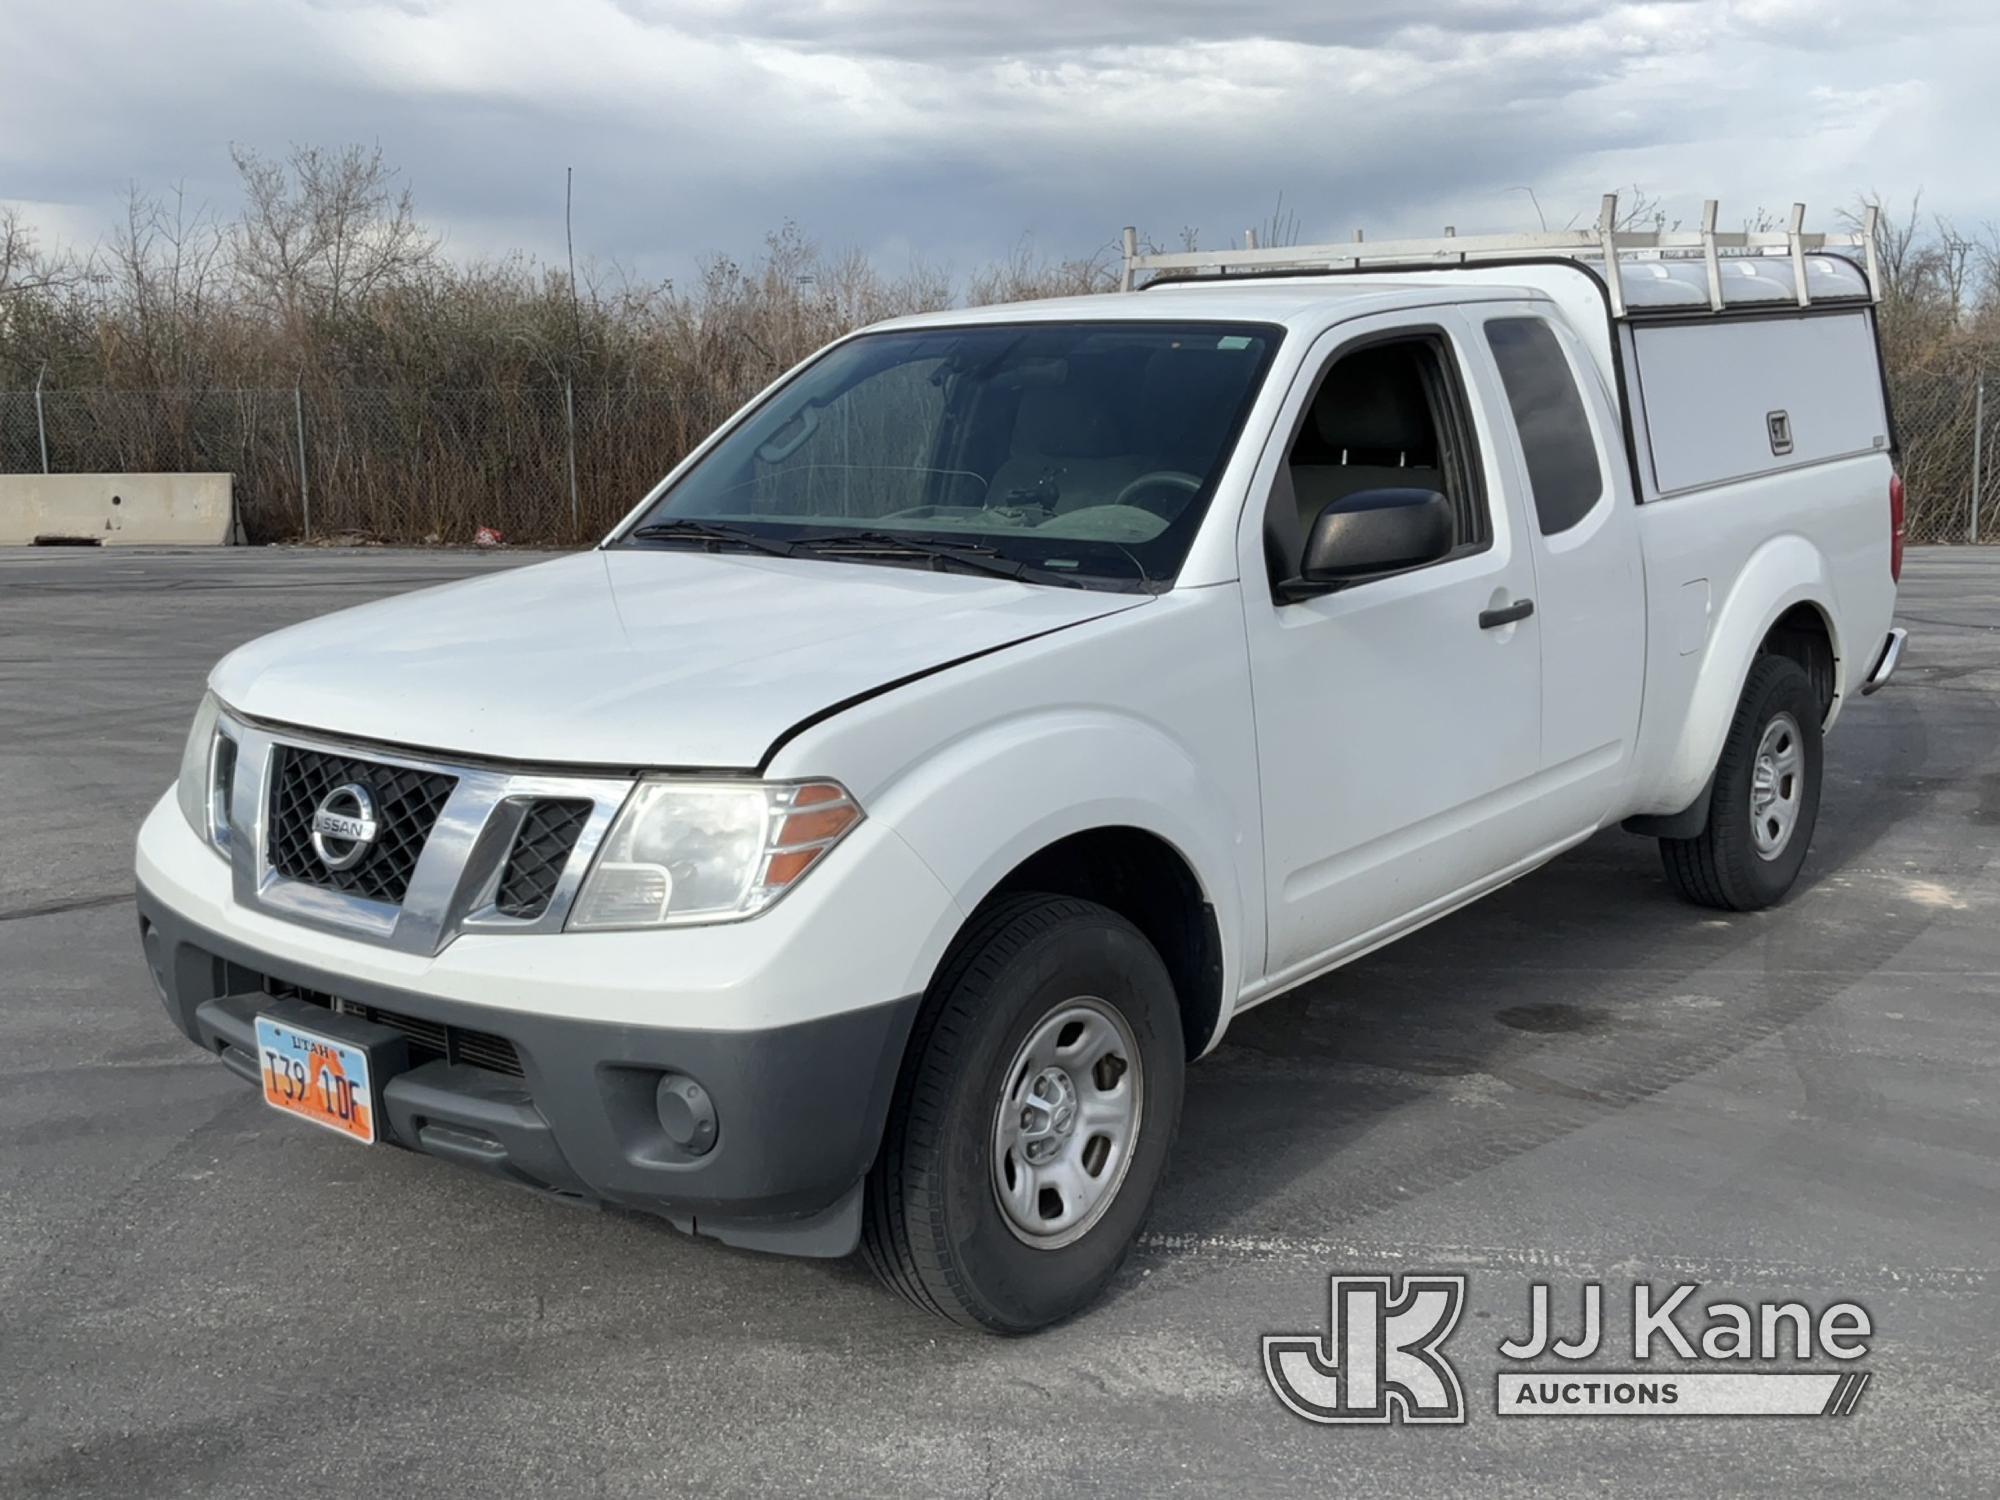 (Salt Lake City, UT) 2015 Nissan Frontier Extended-Cab Pickup Truck Runs & Moves